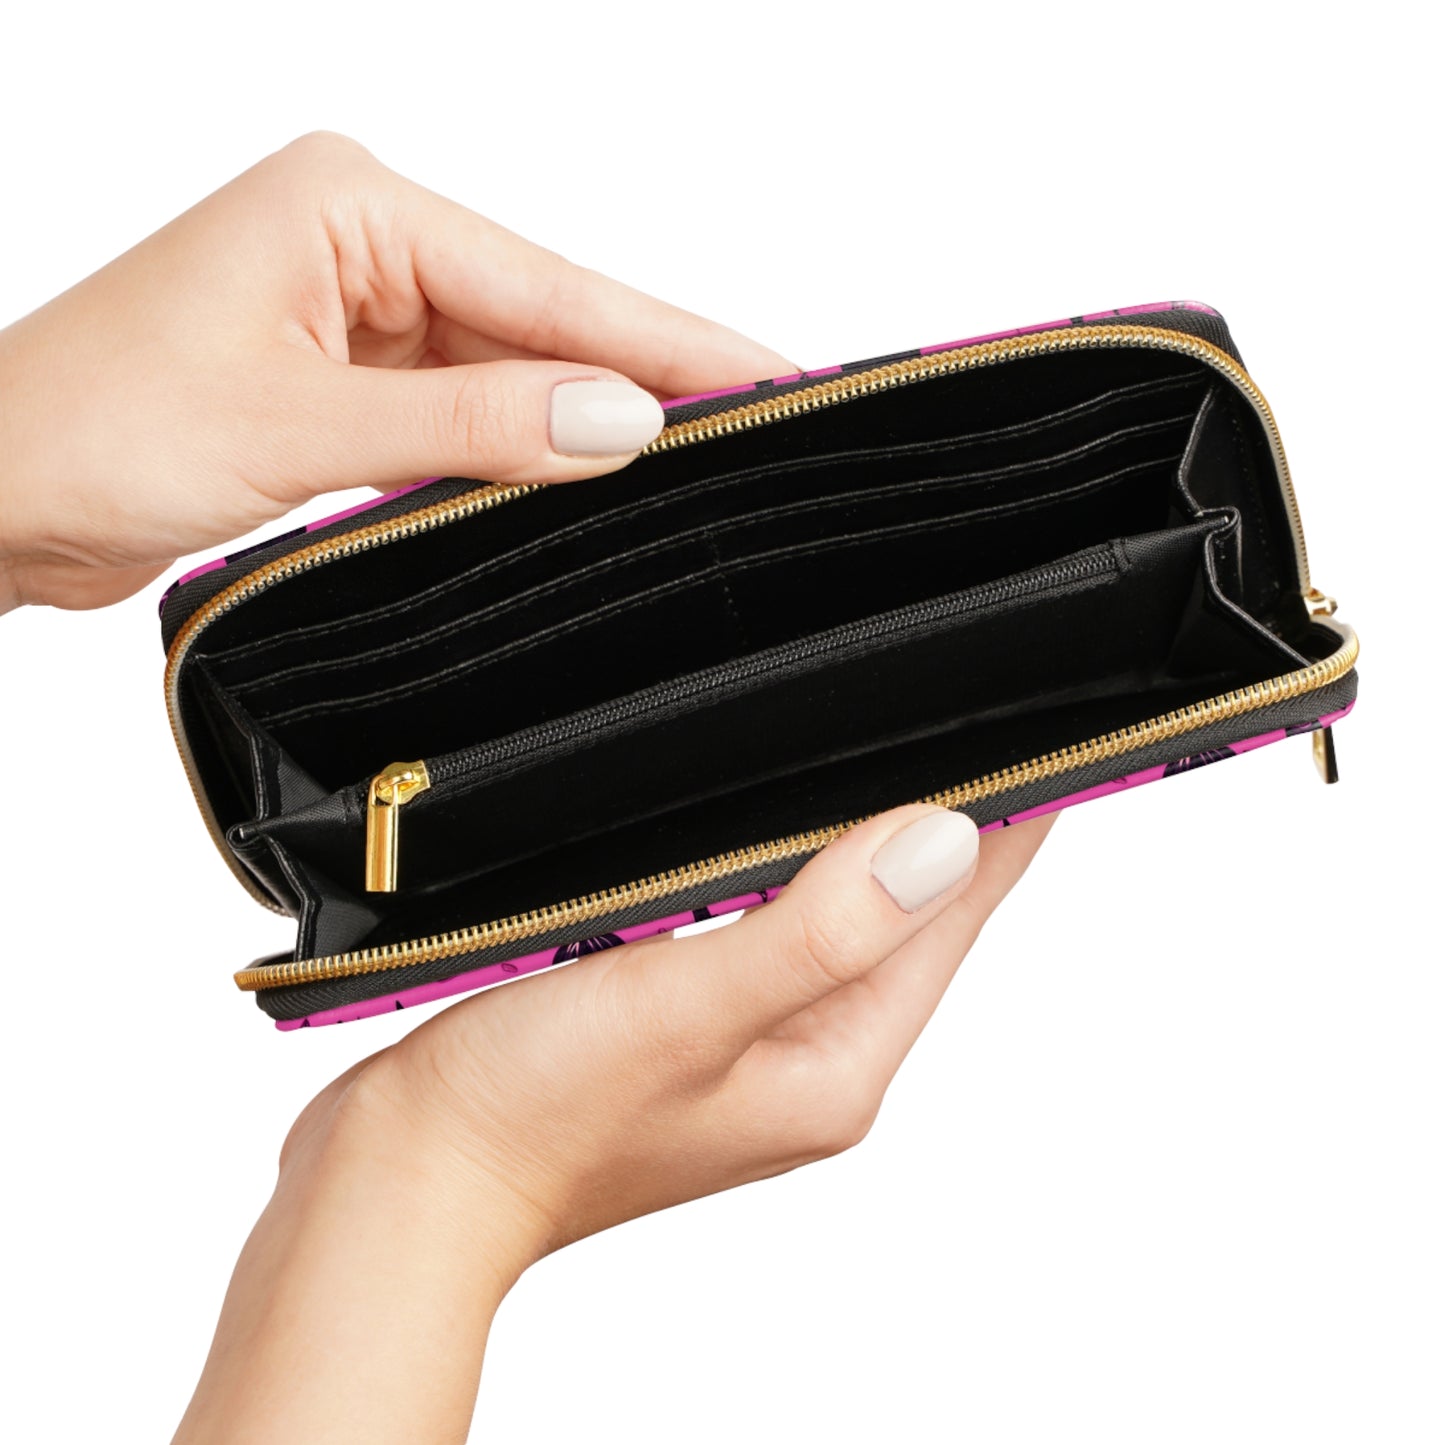 Hot Pink Witch's Hat Wallet | Premium Wallet Design